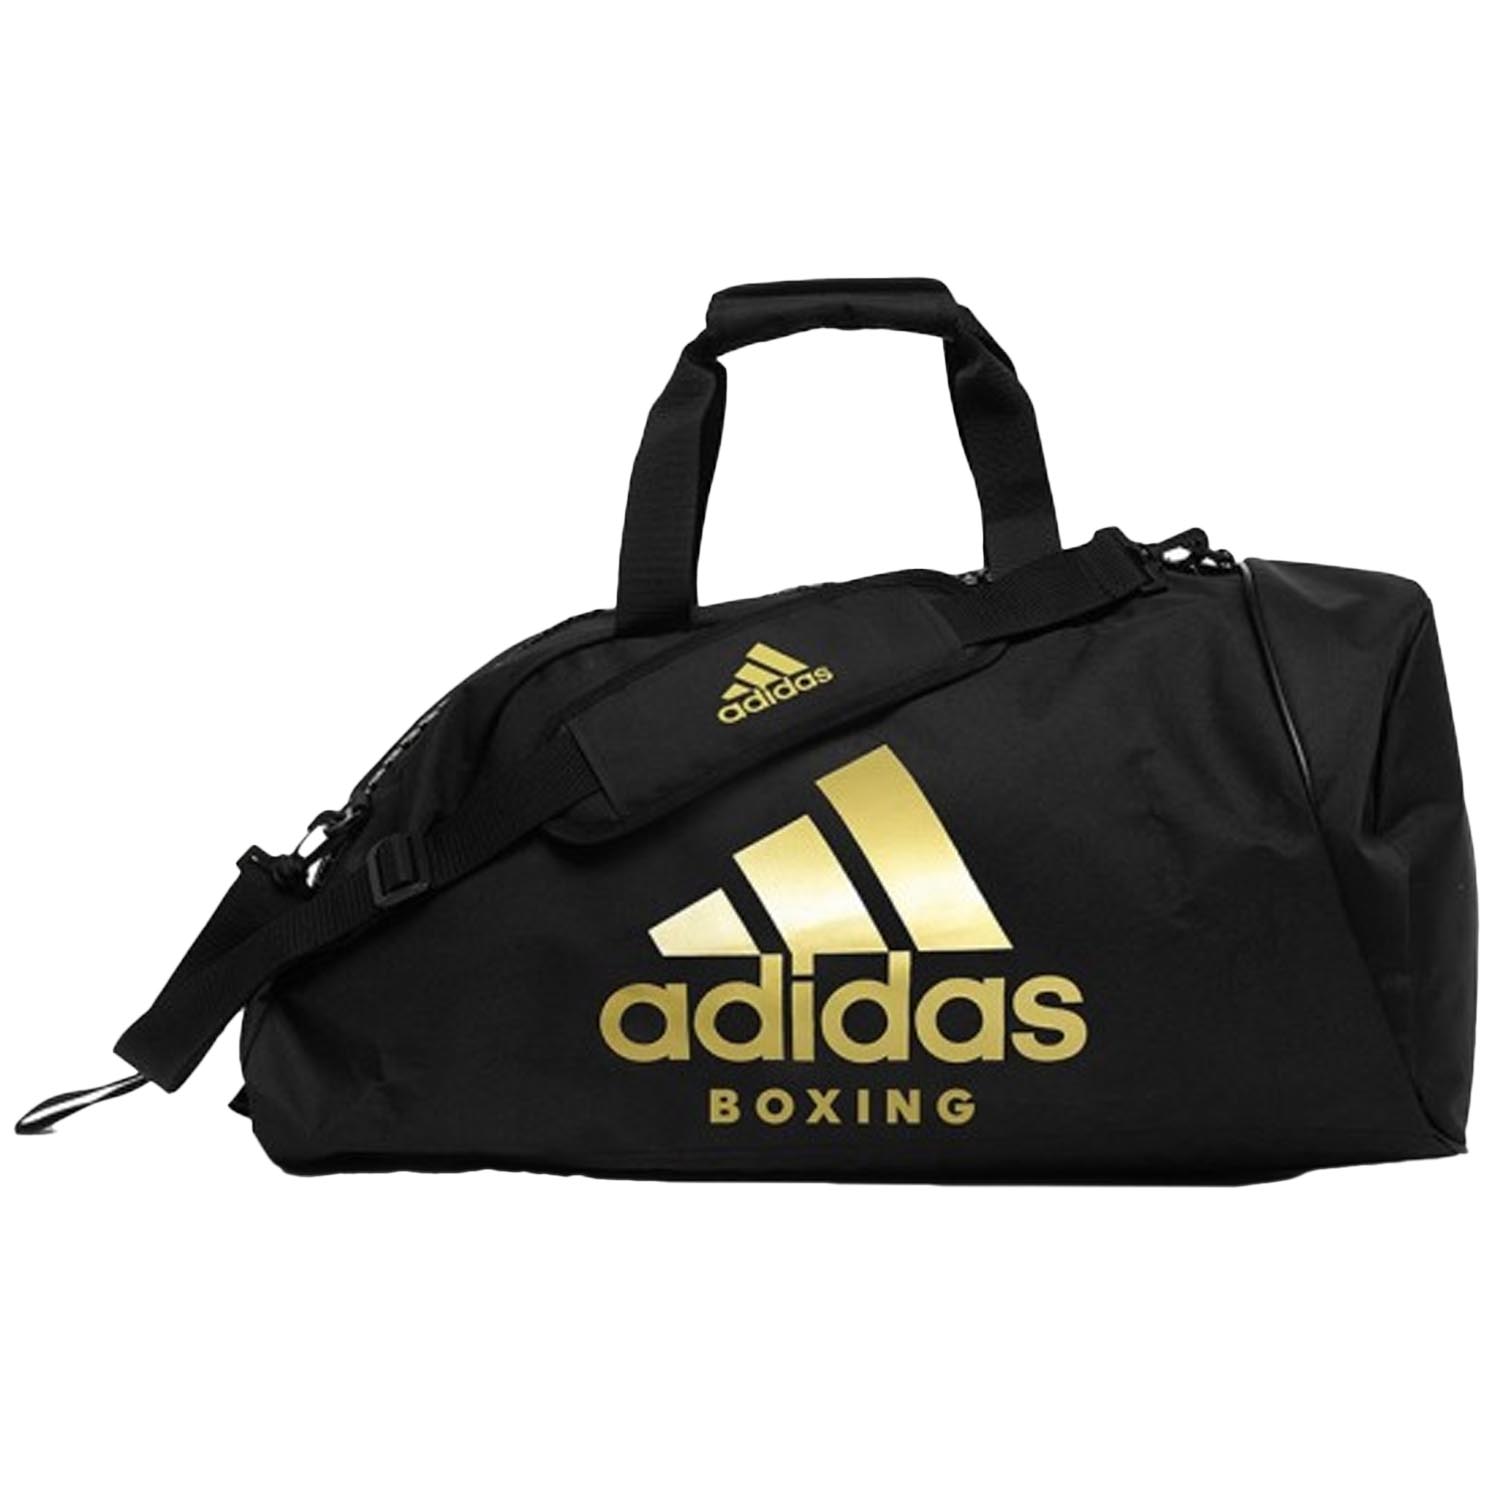 adidas Sporttasche, 2in1 Bag, Boxing, Nylon L, schwarz-gold